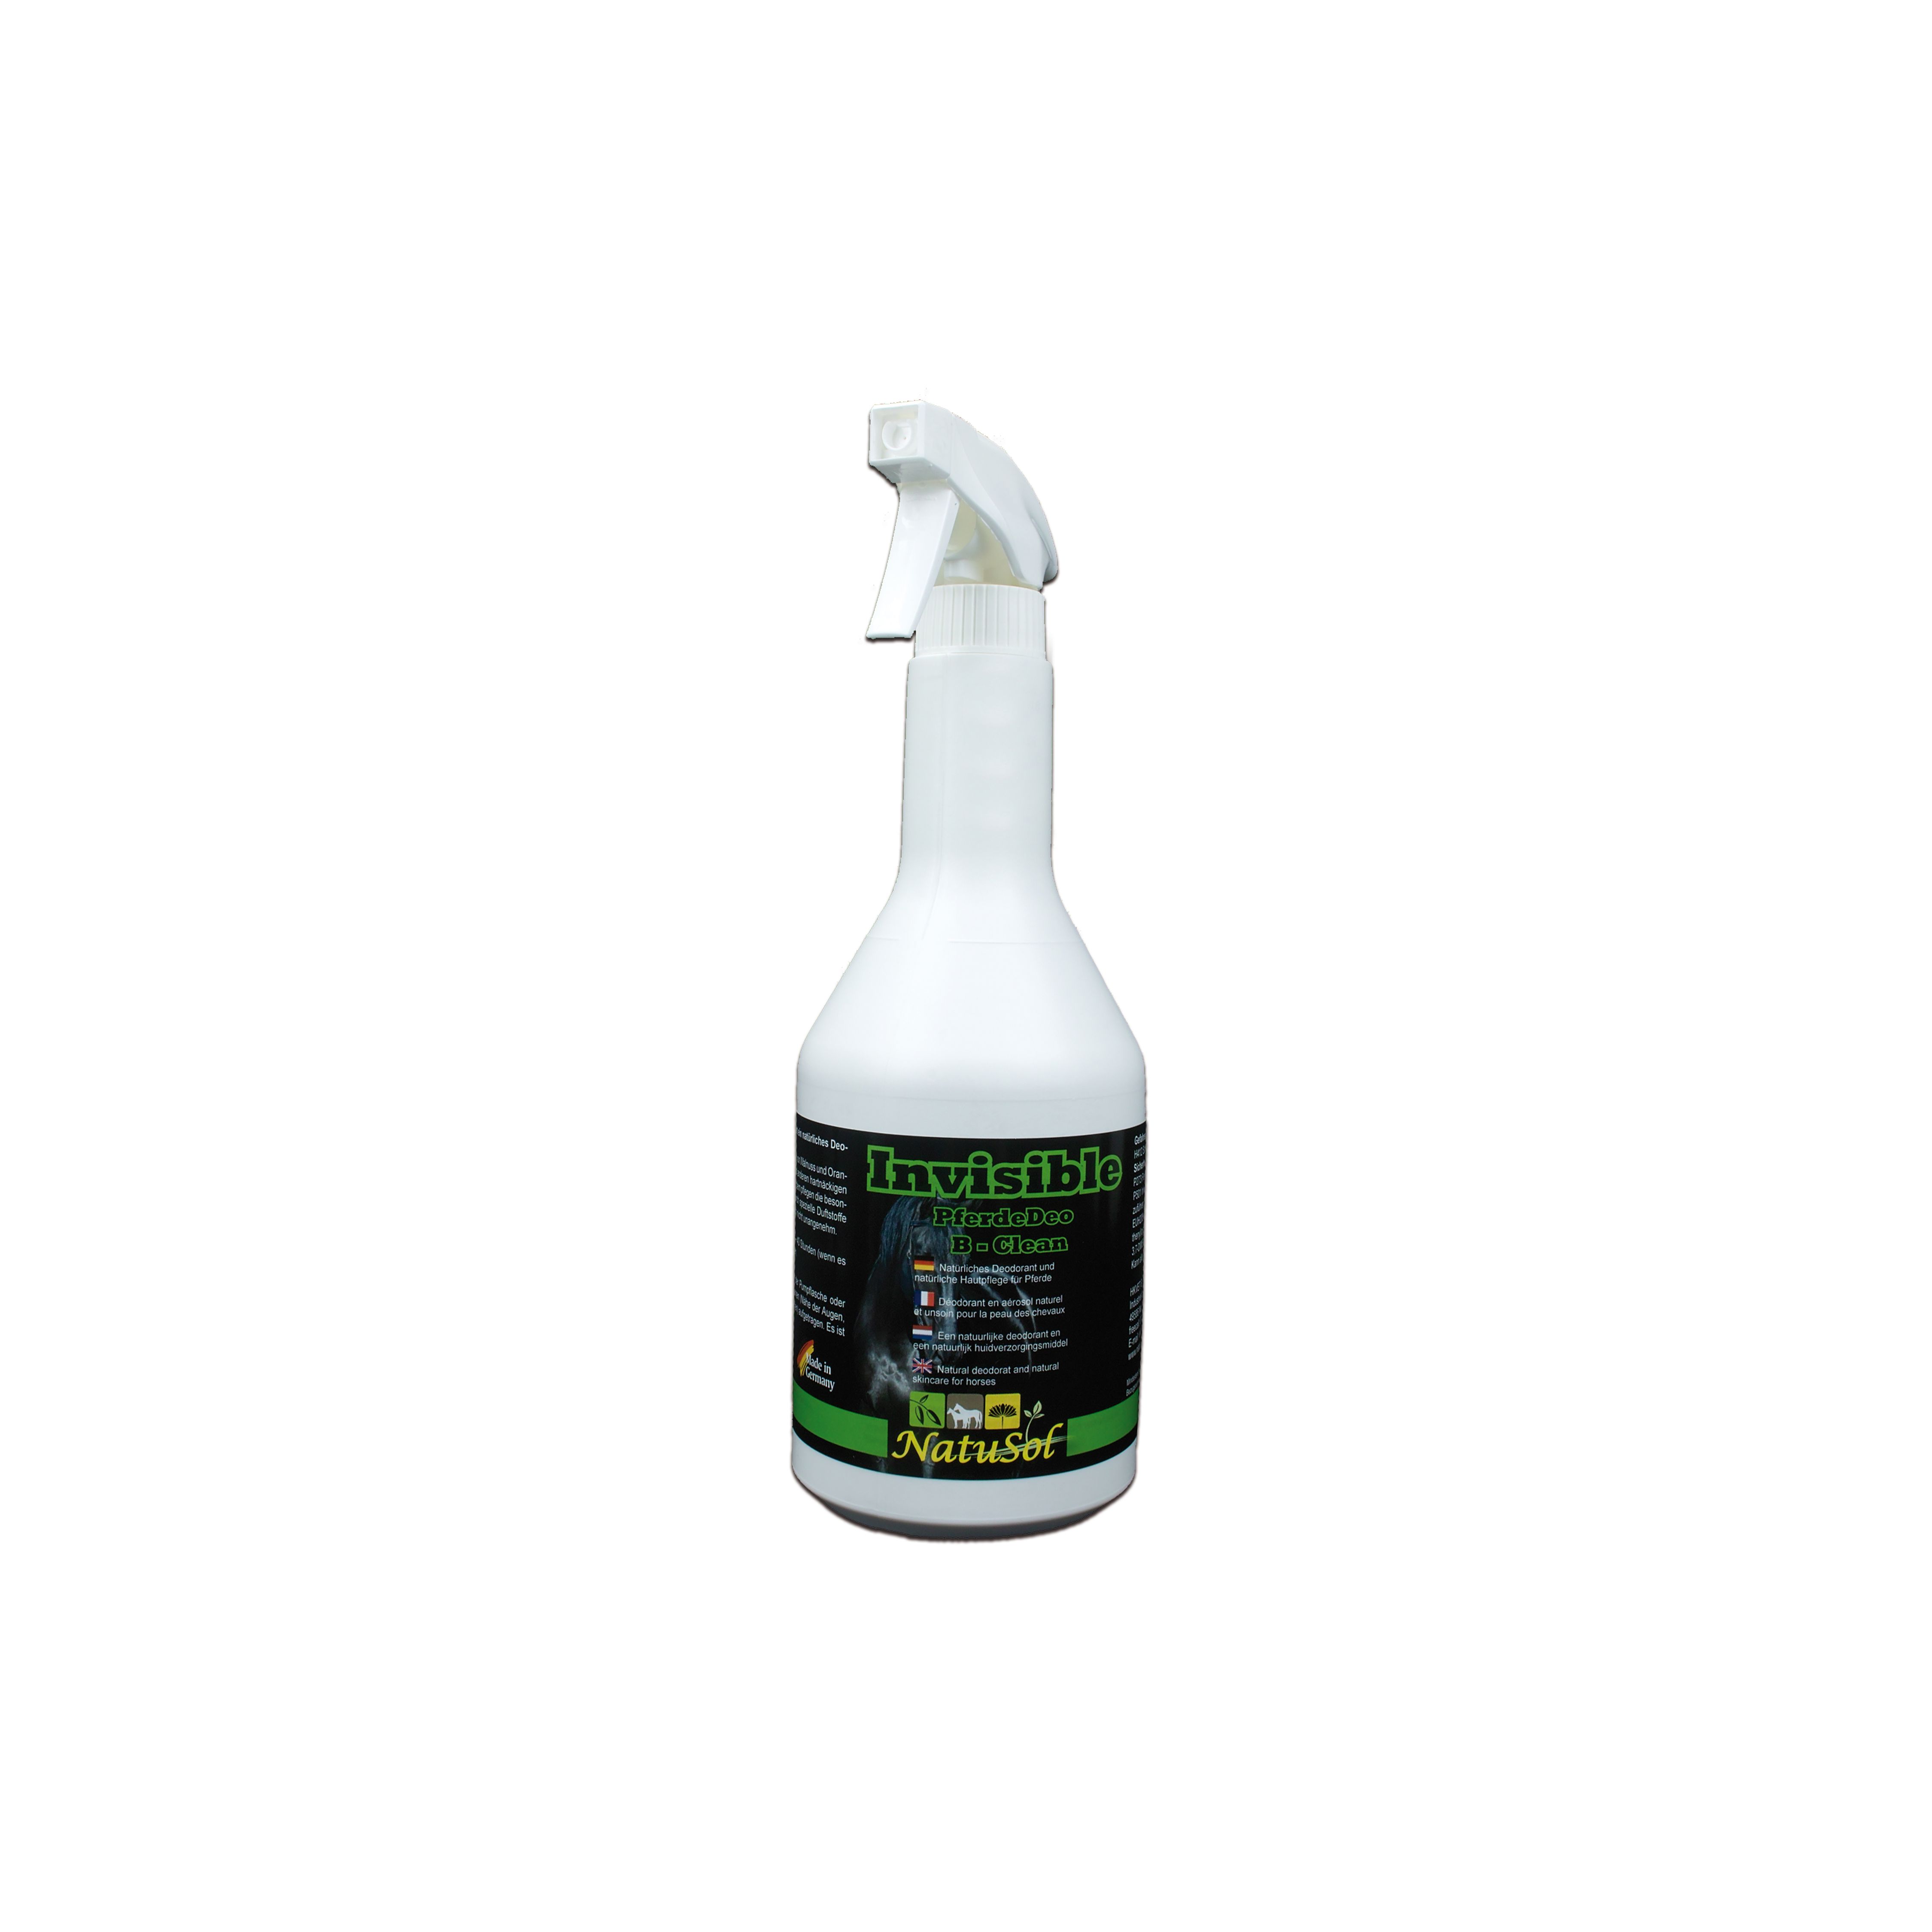 NatuSol Invisible B-Clean für Pferde - natürliches Deodorant